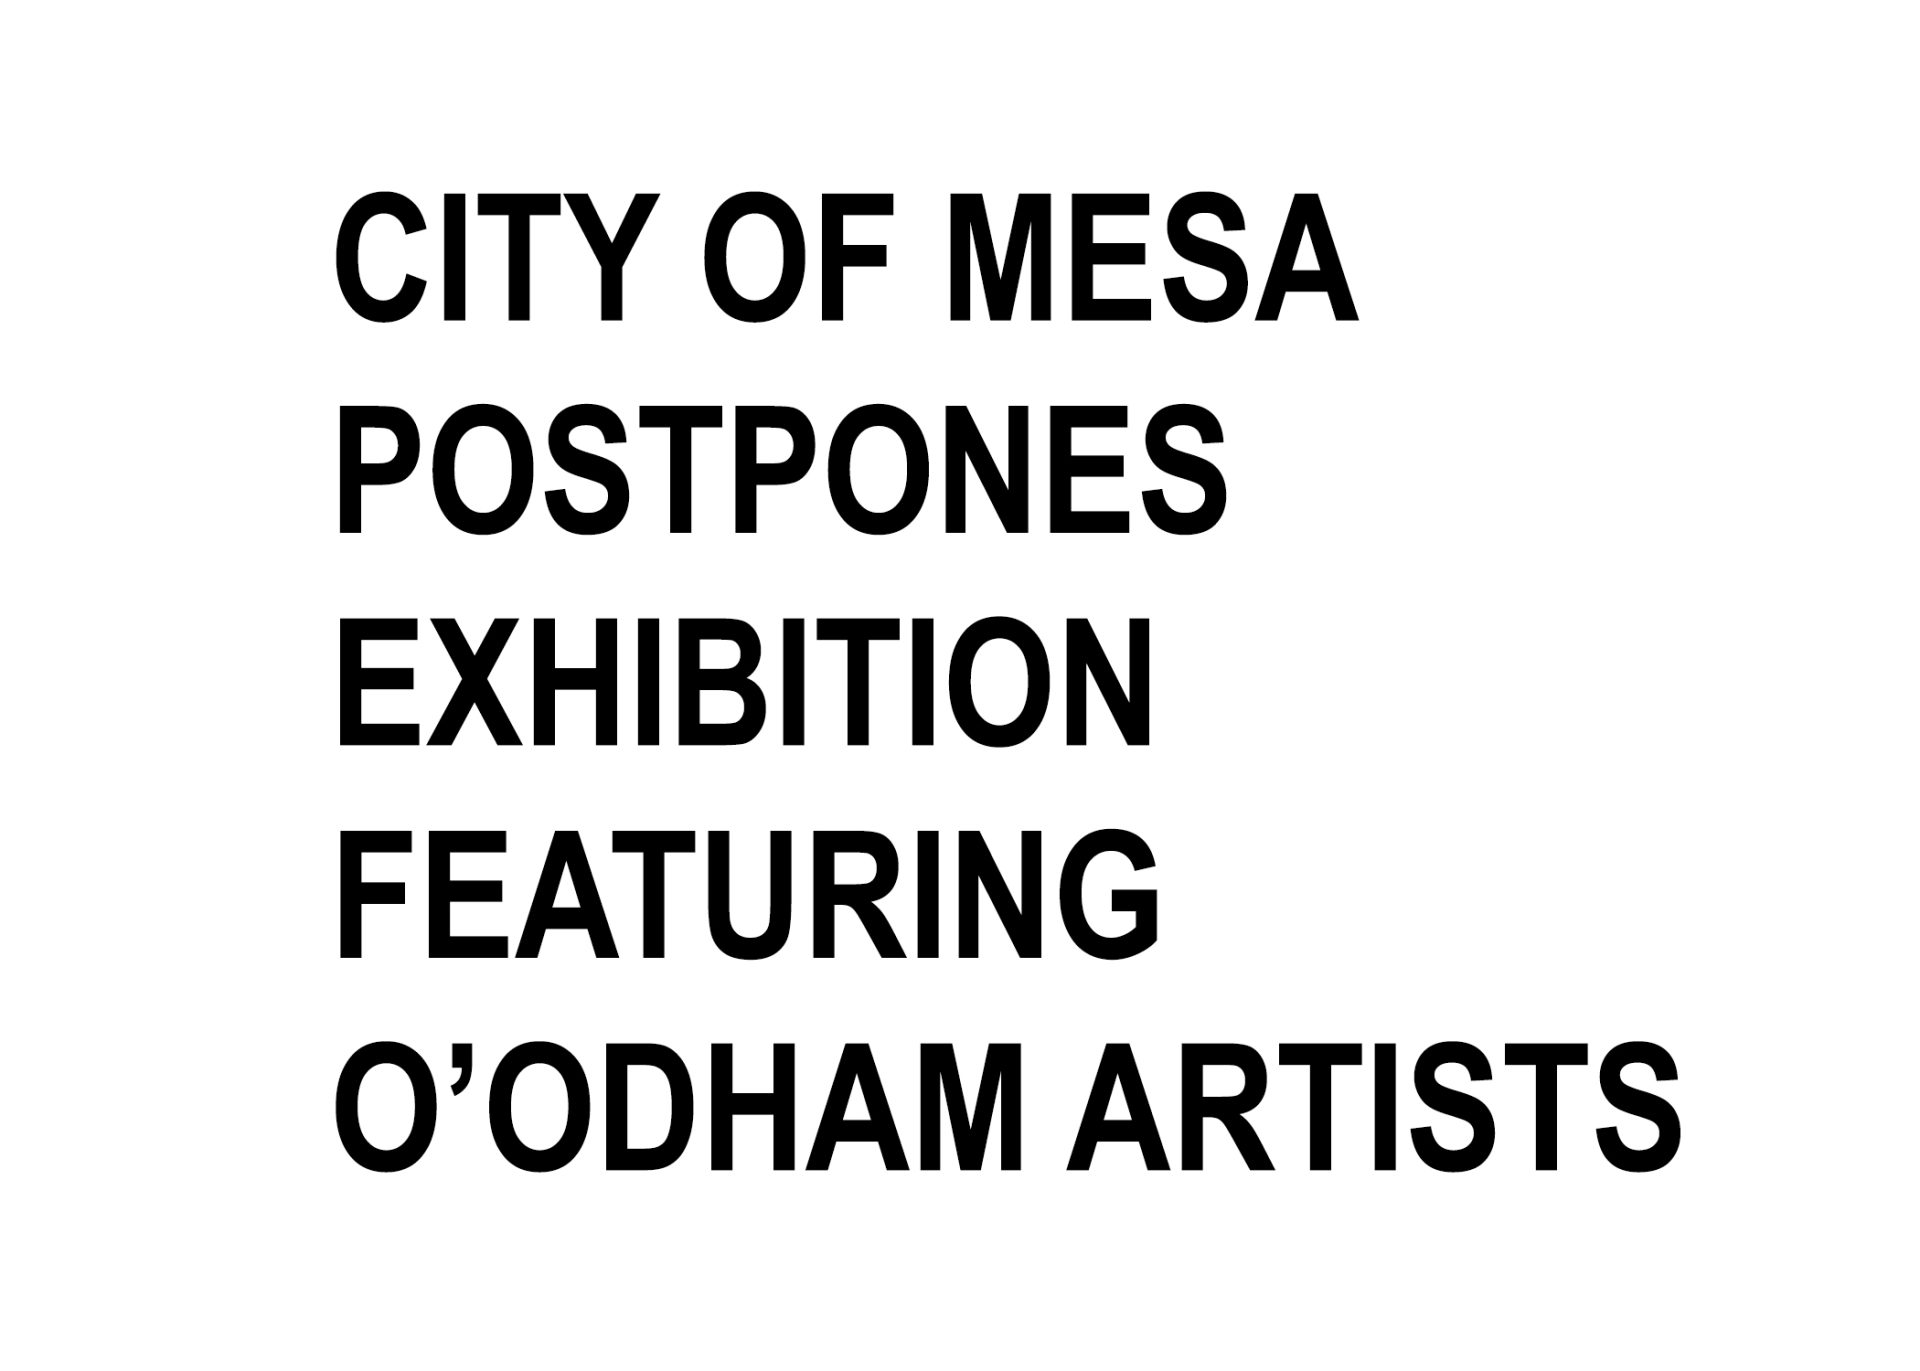 City of Mesa Postpones Exhibition Featuring O’odham Artists